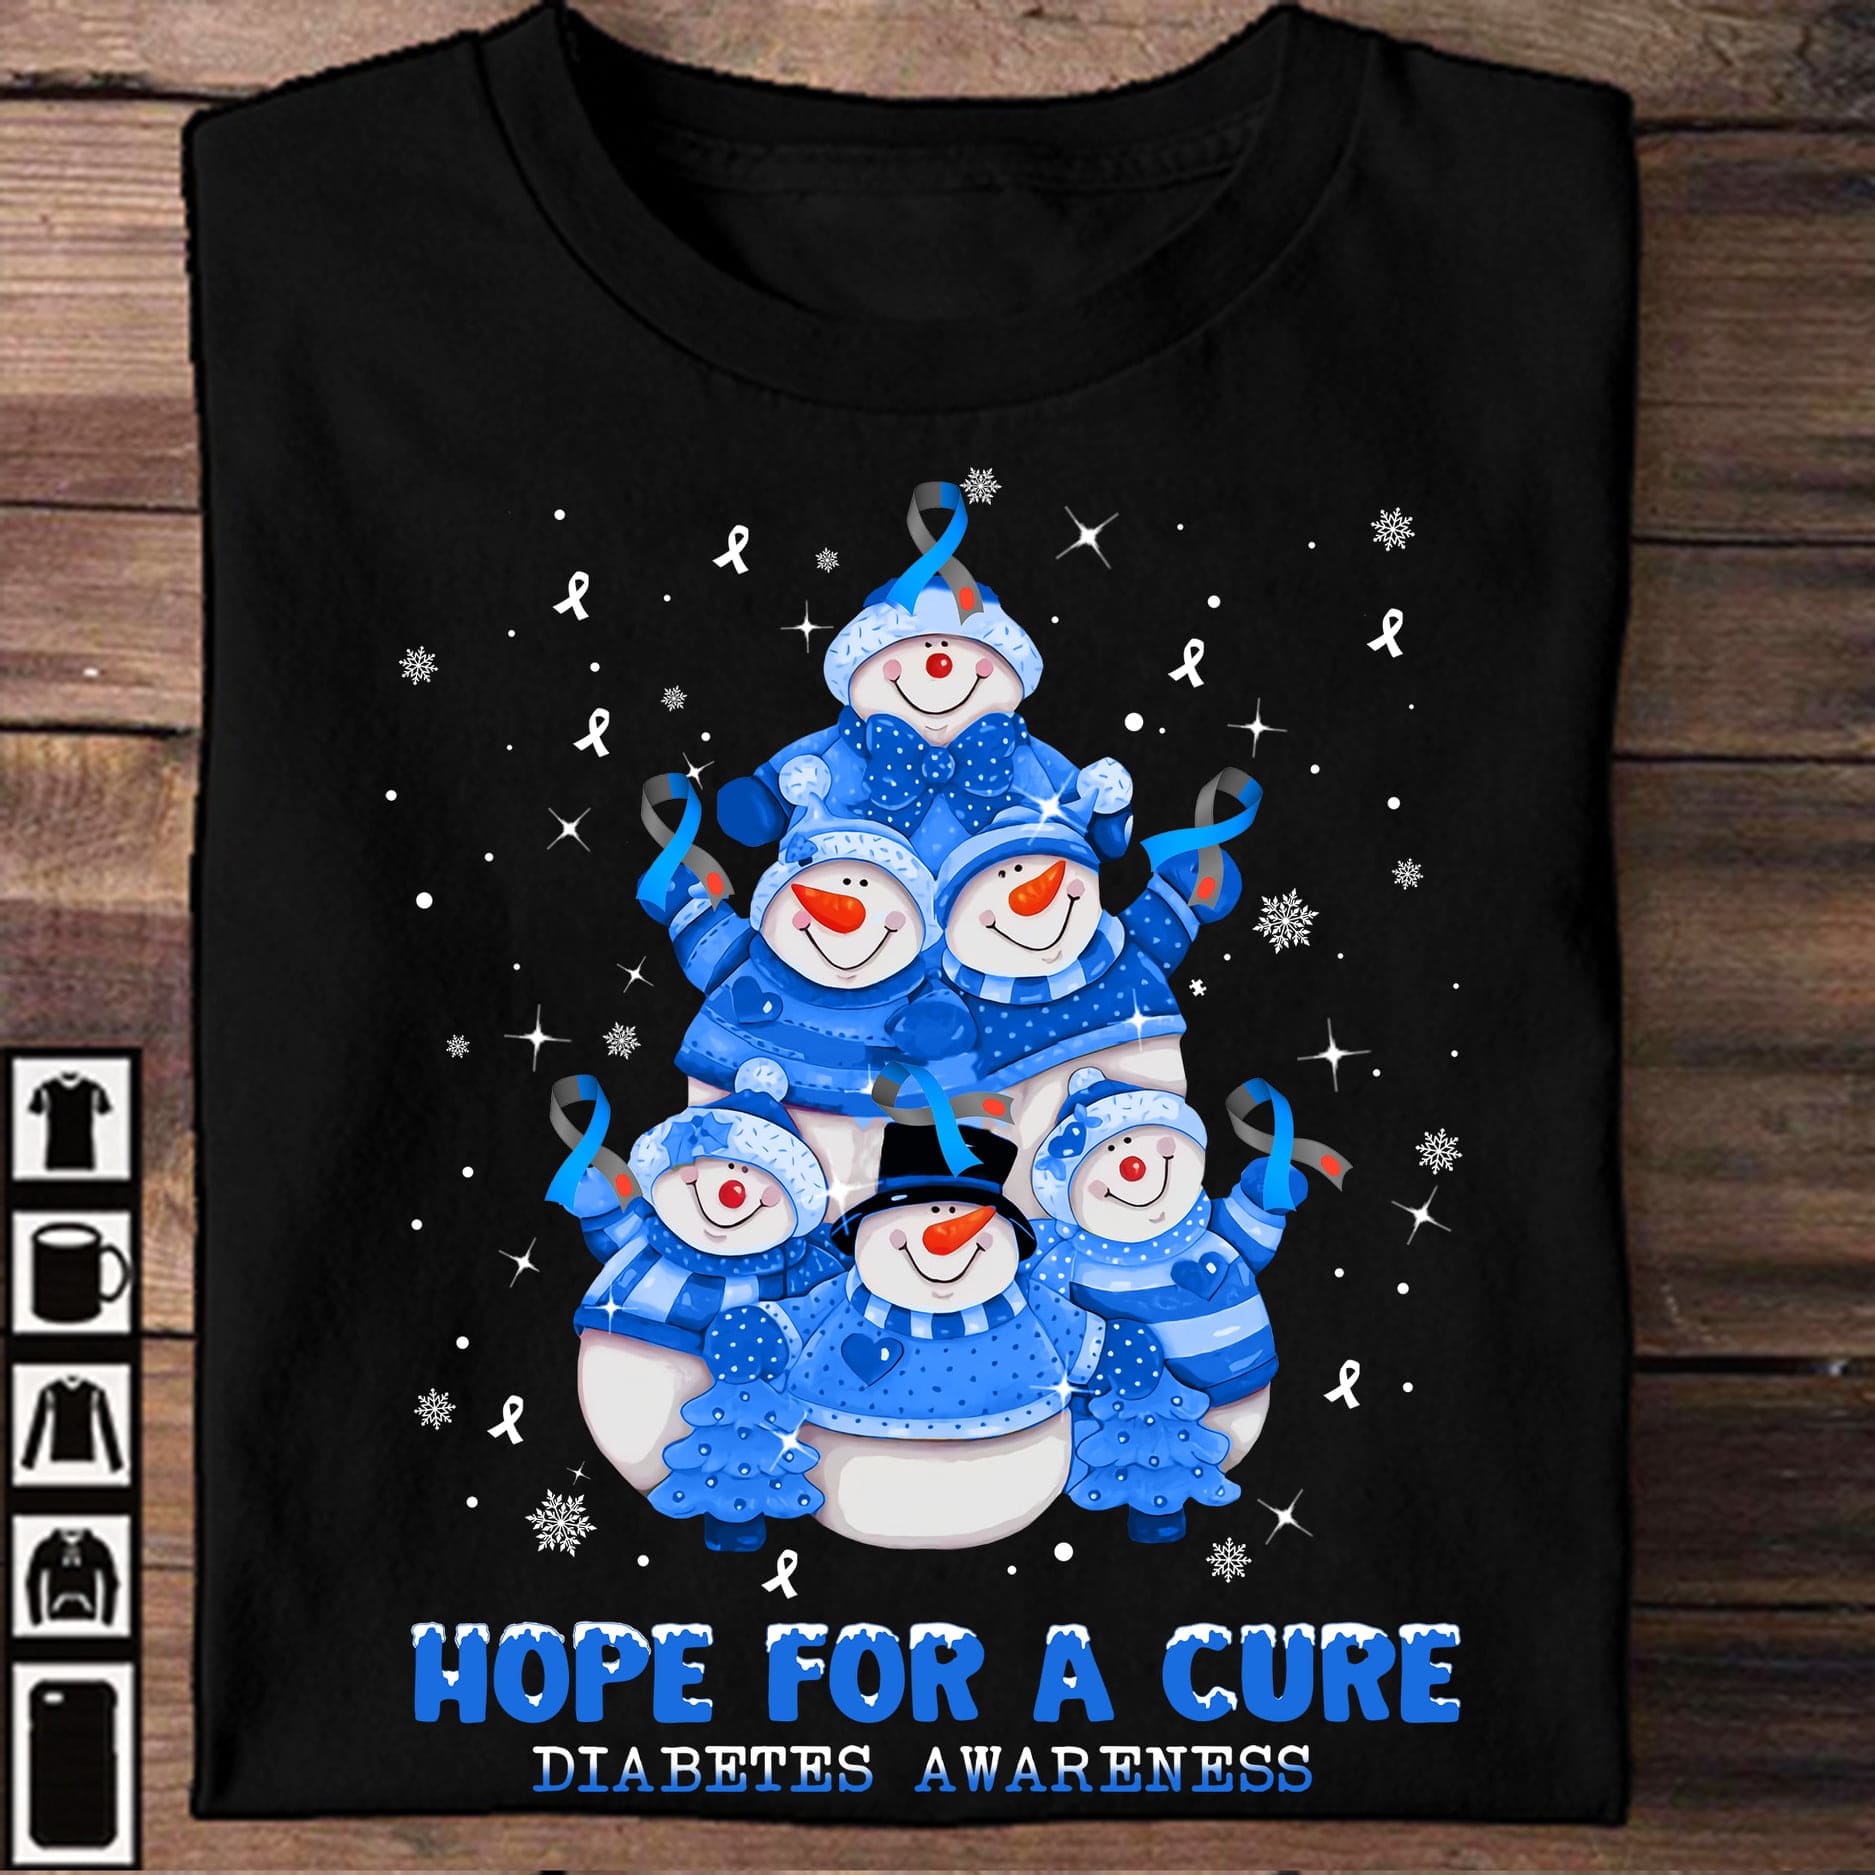 Hope for a cure - Diabetes awareness, Christmas cute snowman, Snowman diabetes